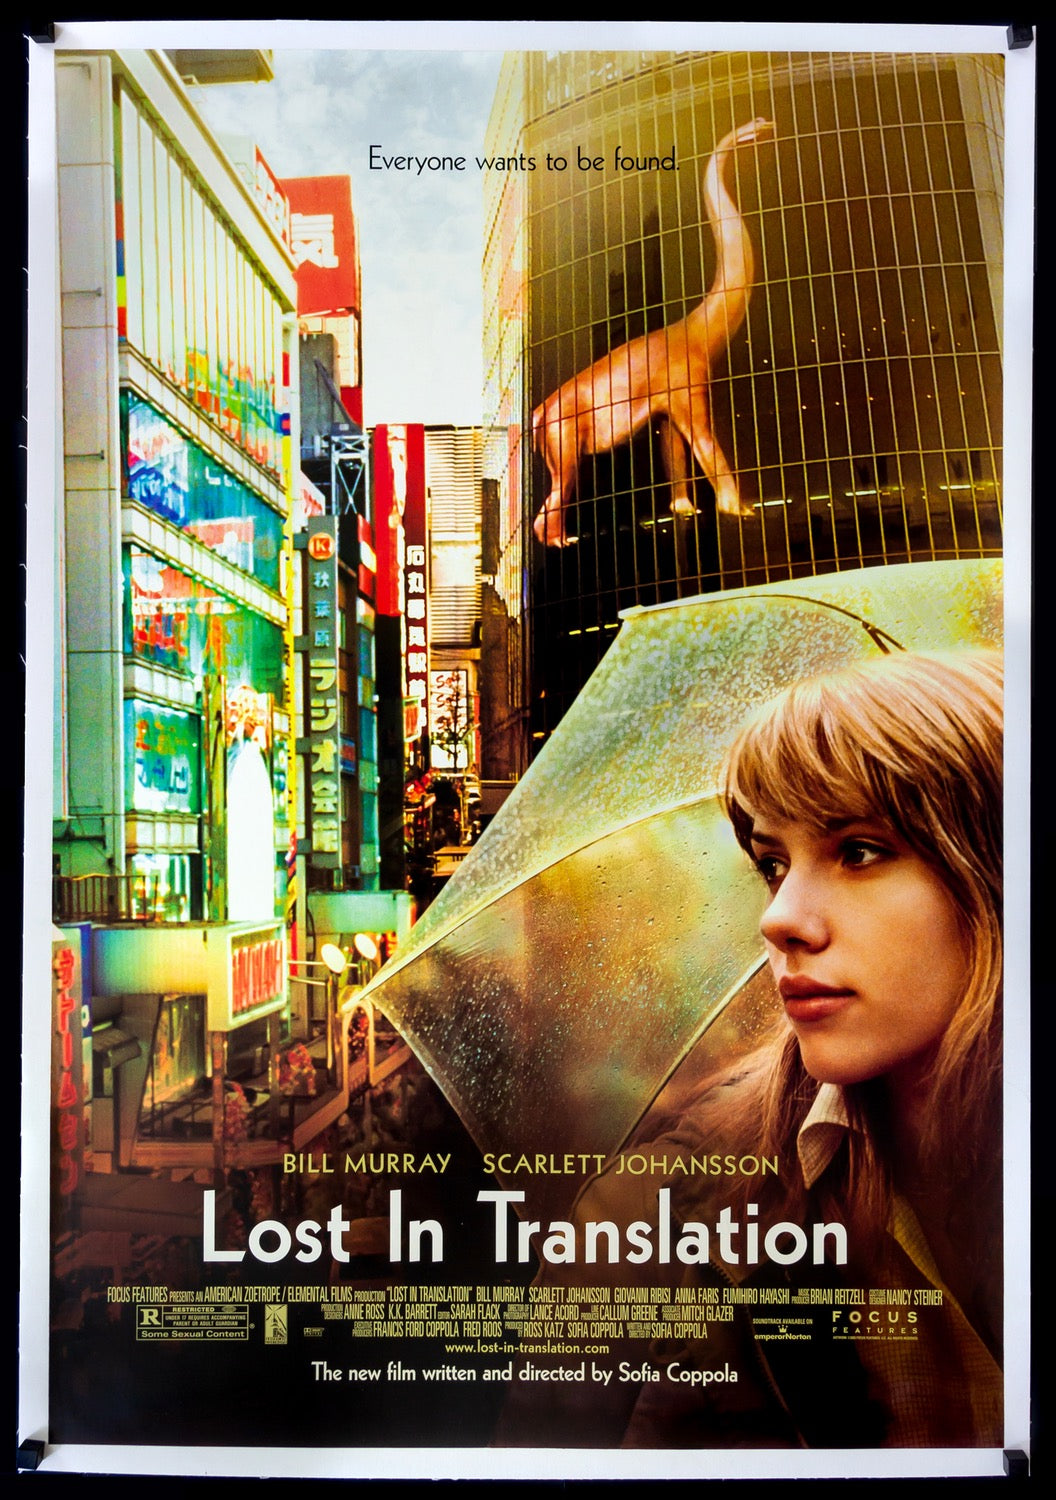 Lost in Translation (2003) original movie poster for sale at Original Film Art